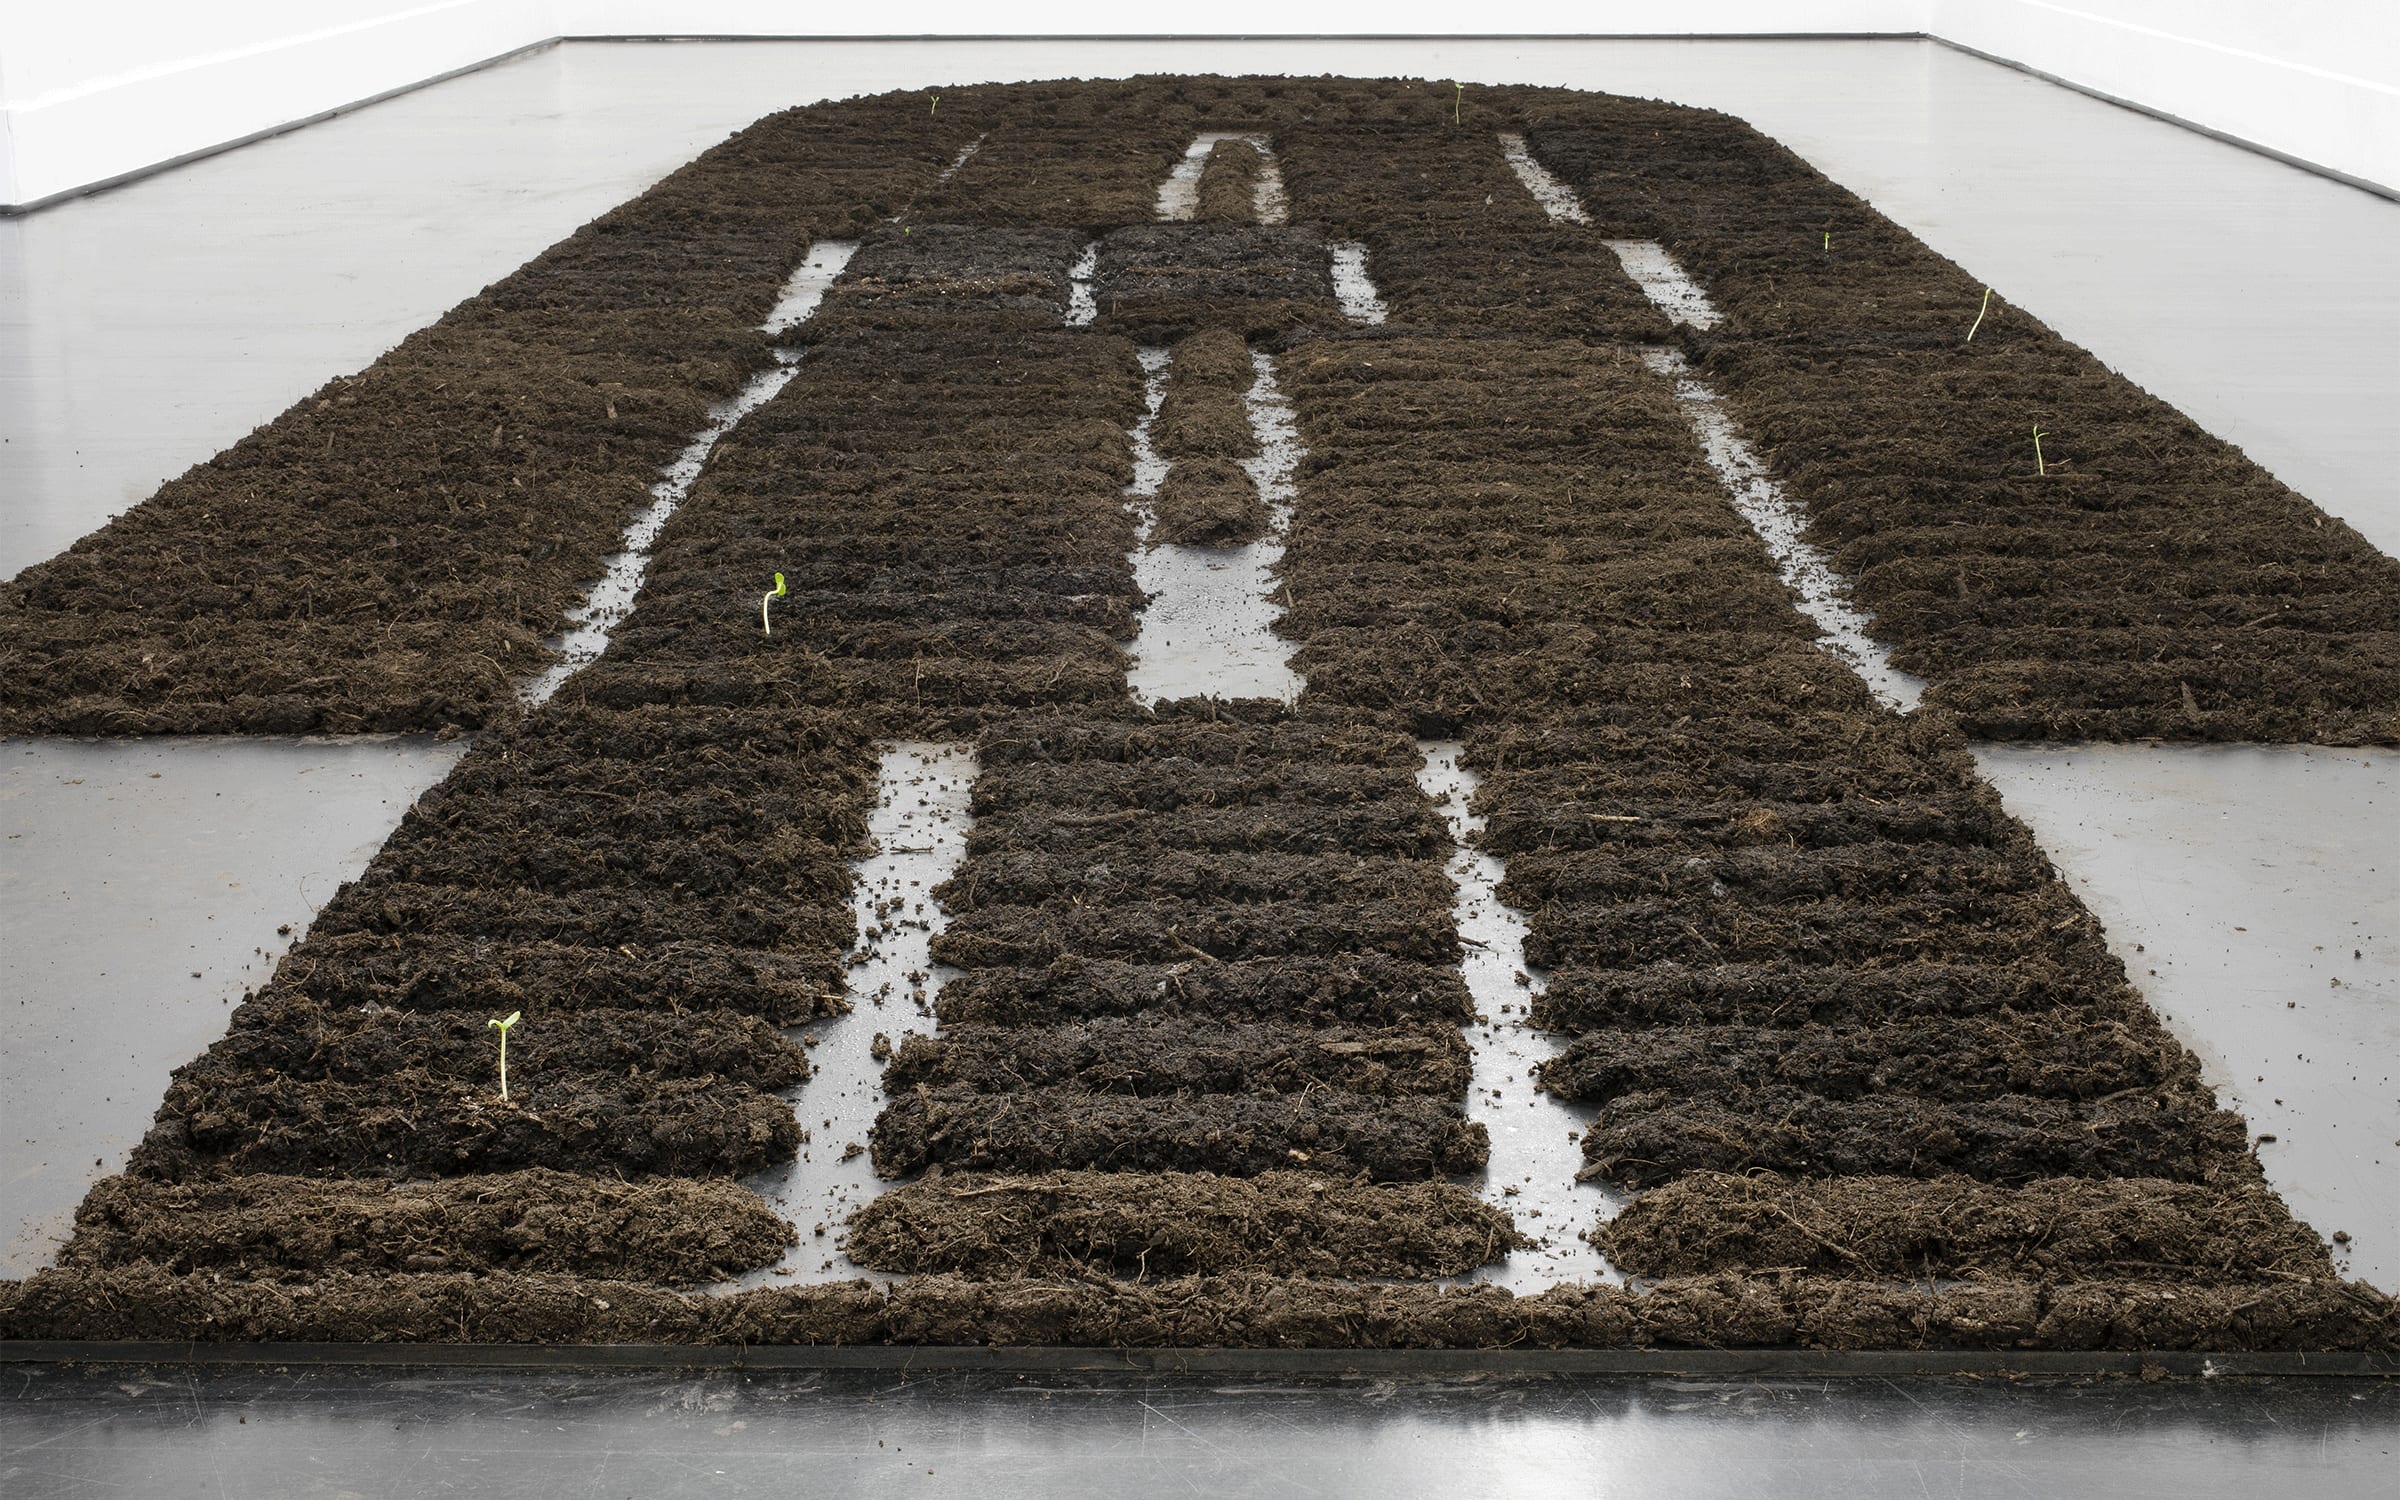 Installation view of Binta Diaw’s artwork Chorus of soil, 2020. Photograph by Antonio Maniscalco. Courtesy of the artist and Galleria Giampaolo Abbondio.